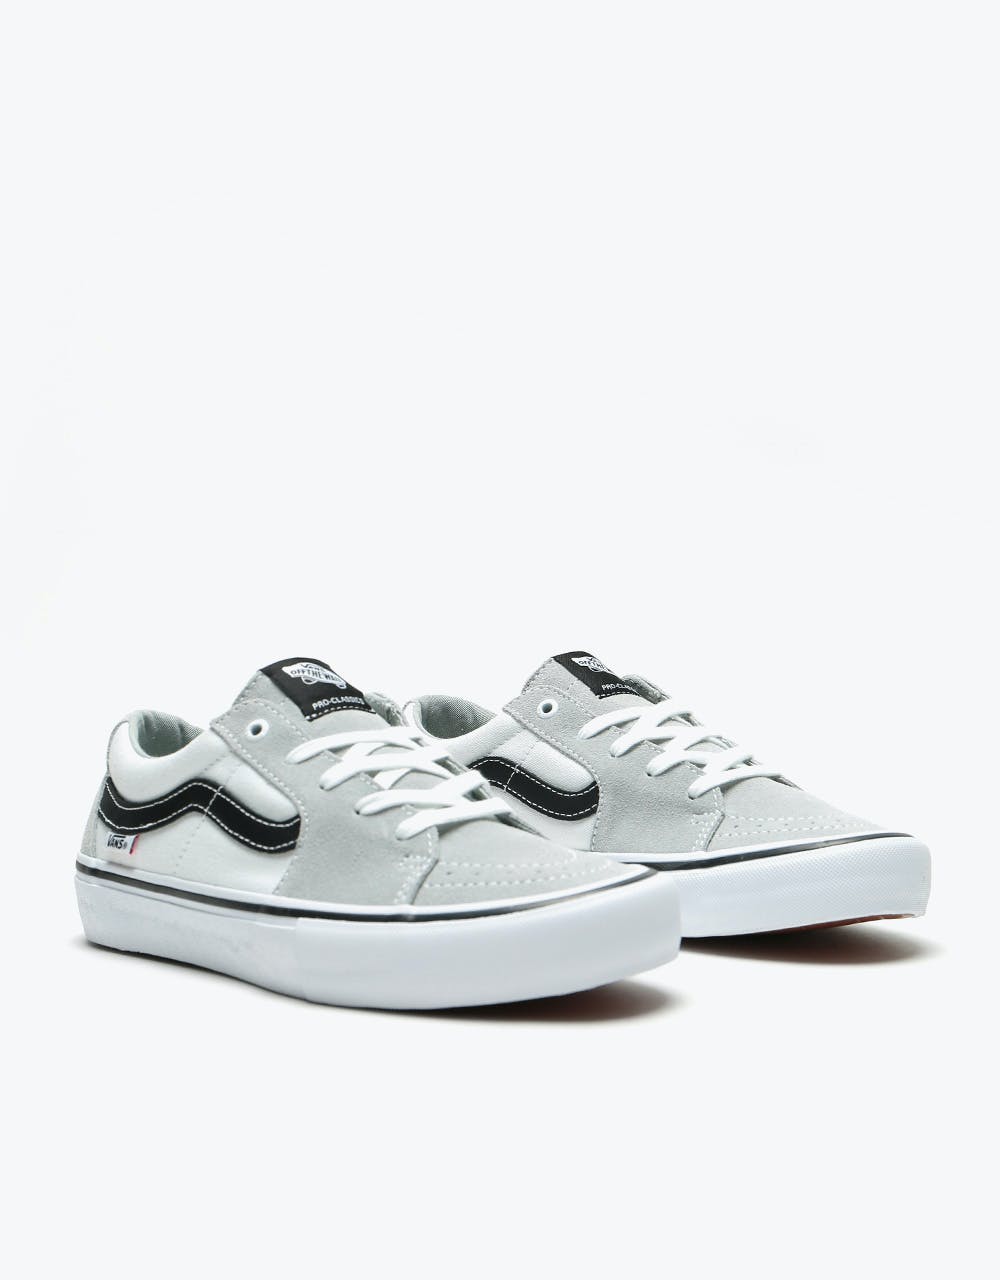 Vans Sk8-Low Pro Skate Shoes - Mirage/White